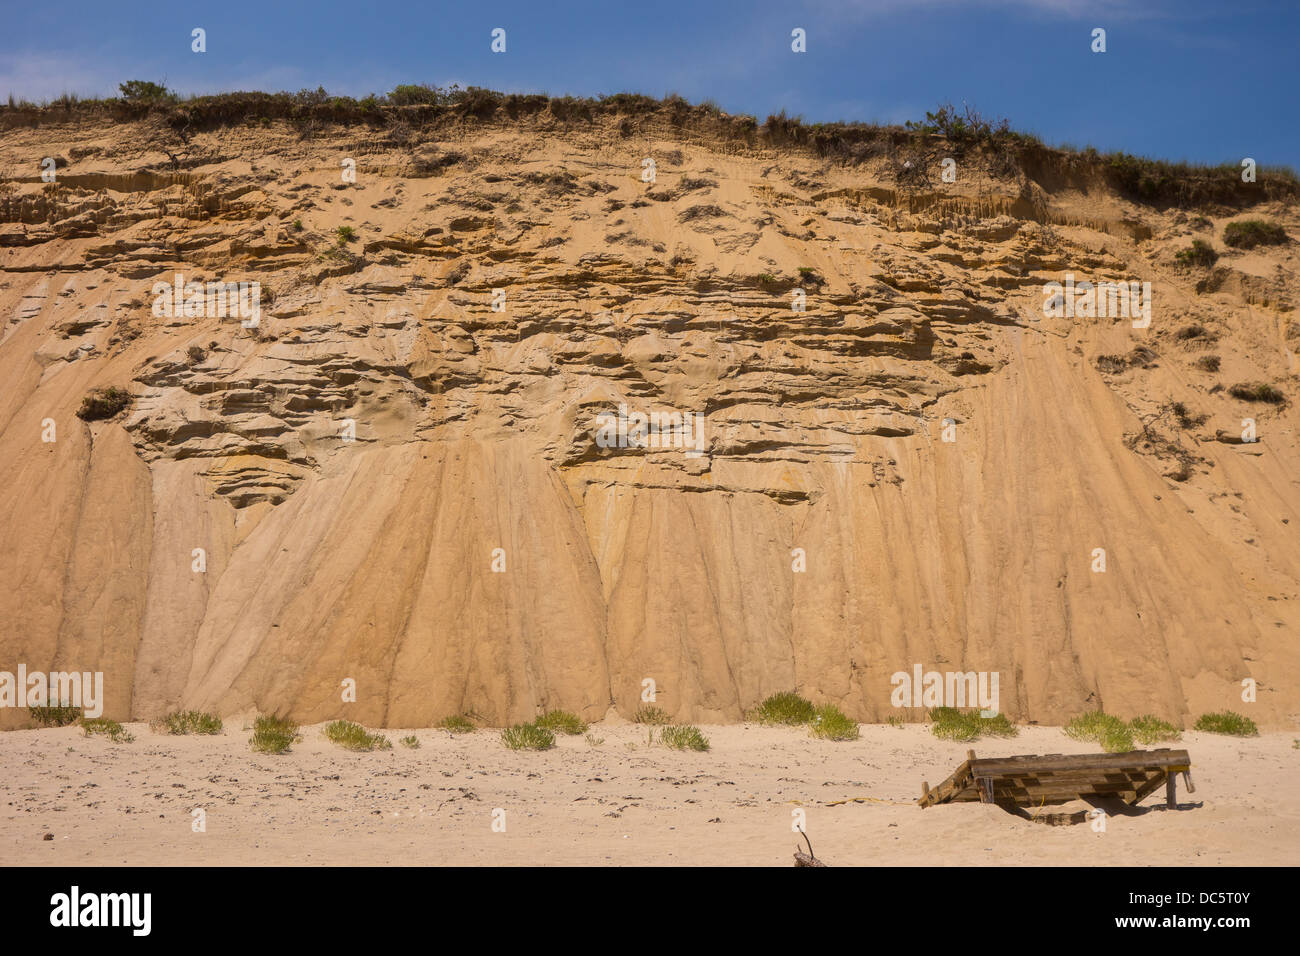 CAPE COD, MASSACHUSETTS, USA - Sand dunes at White Crest beach near town of Wellfleet. Stock Photo